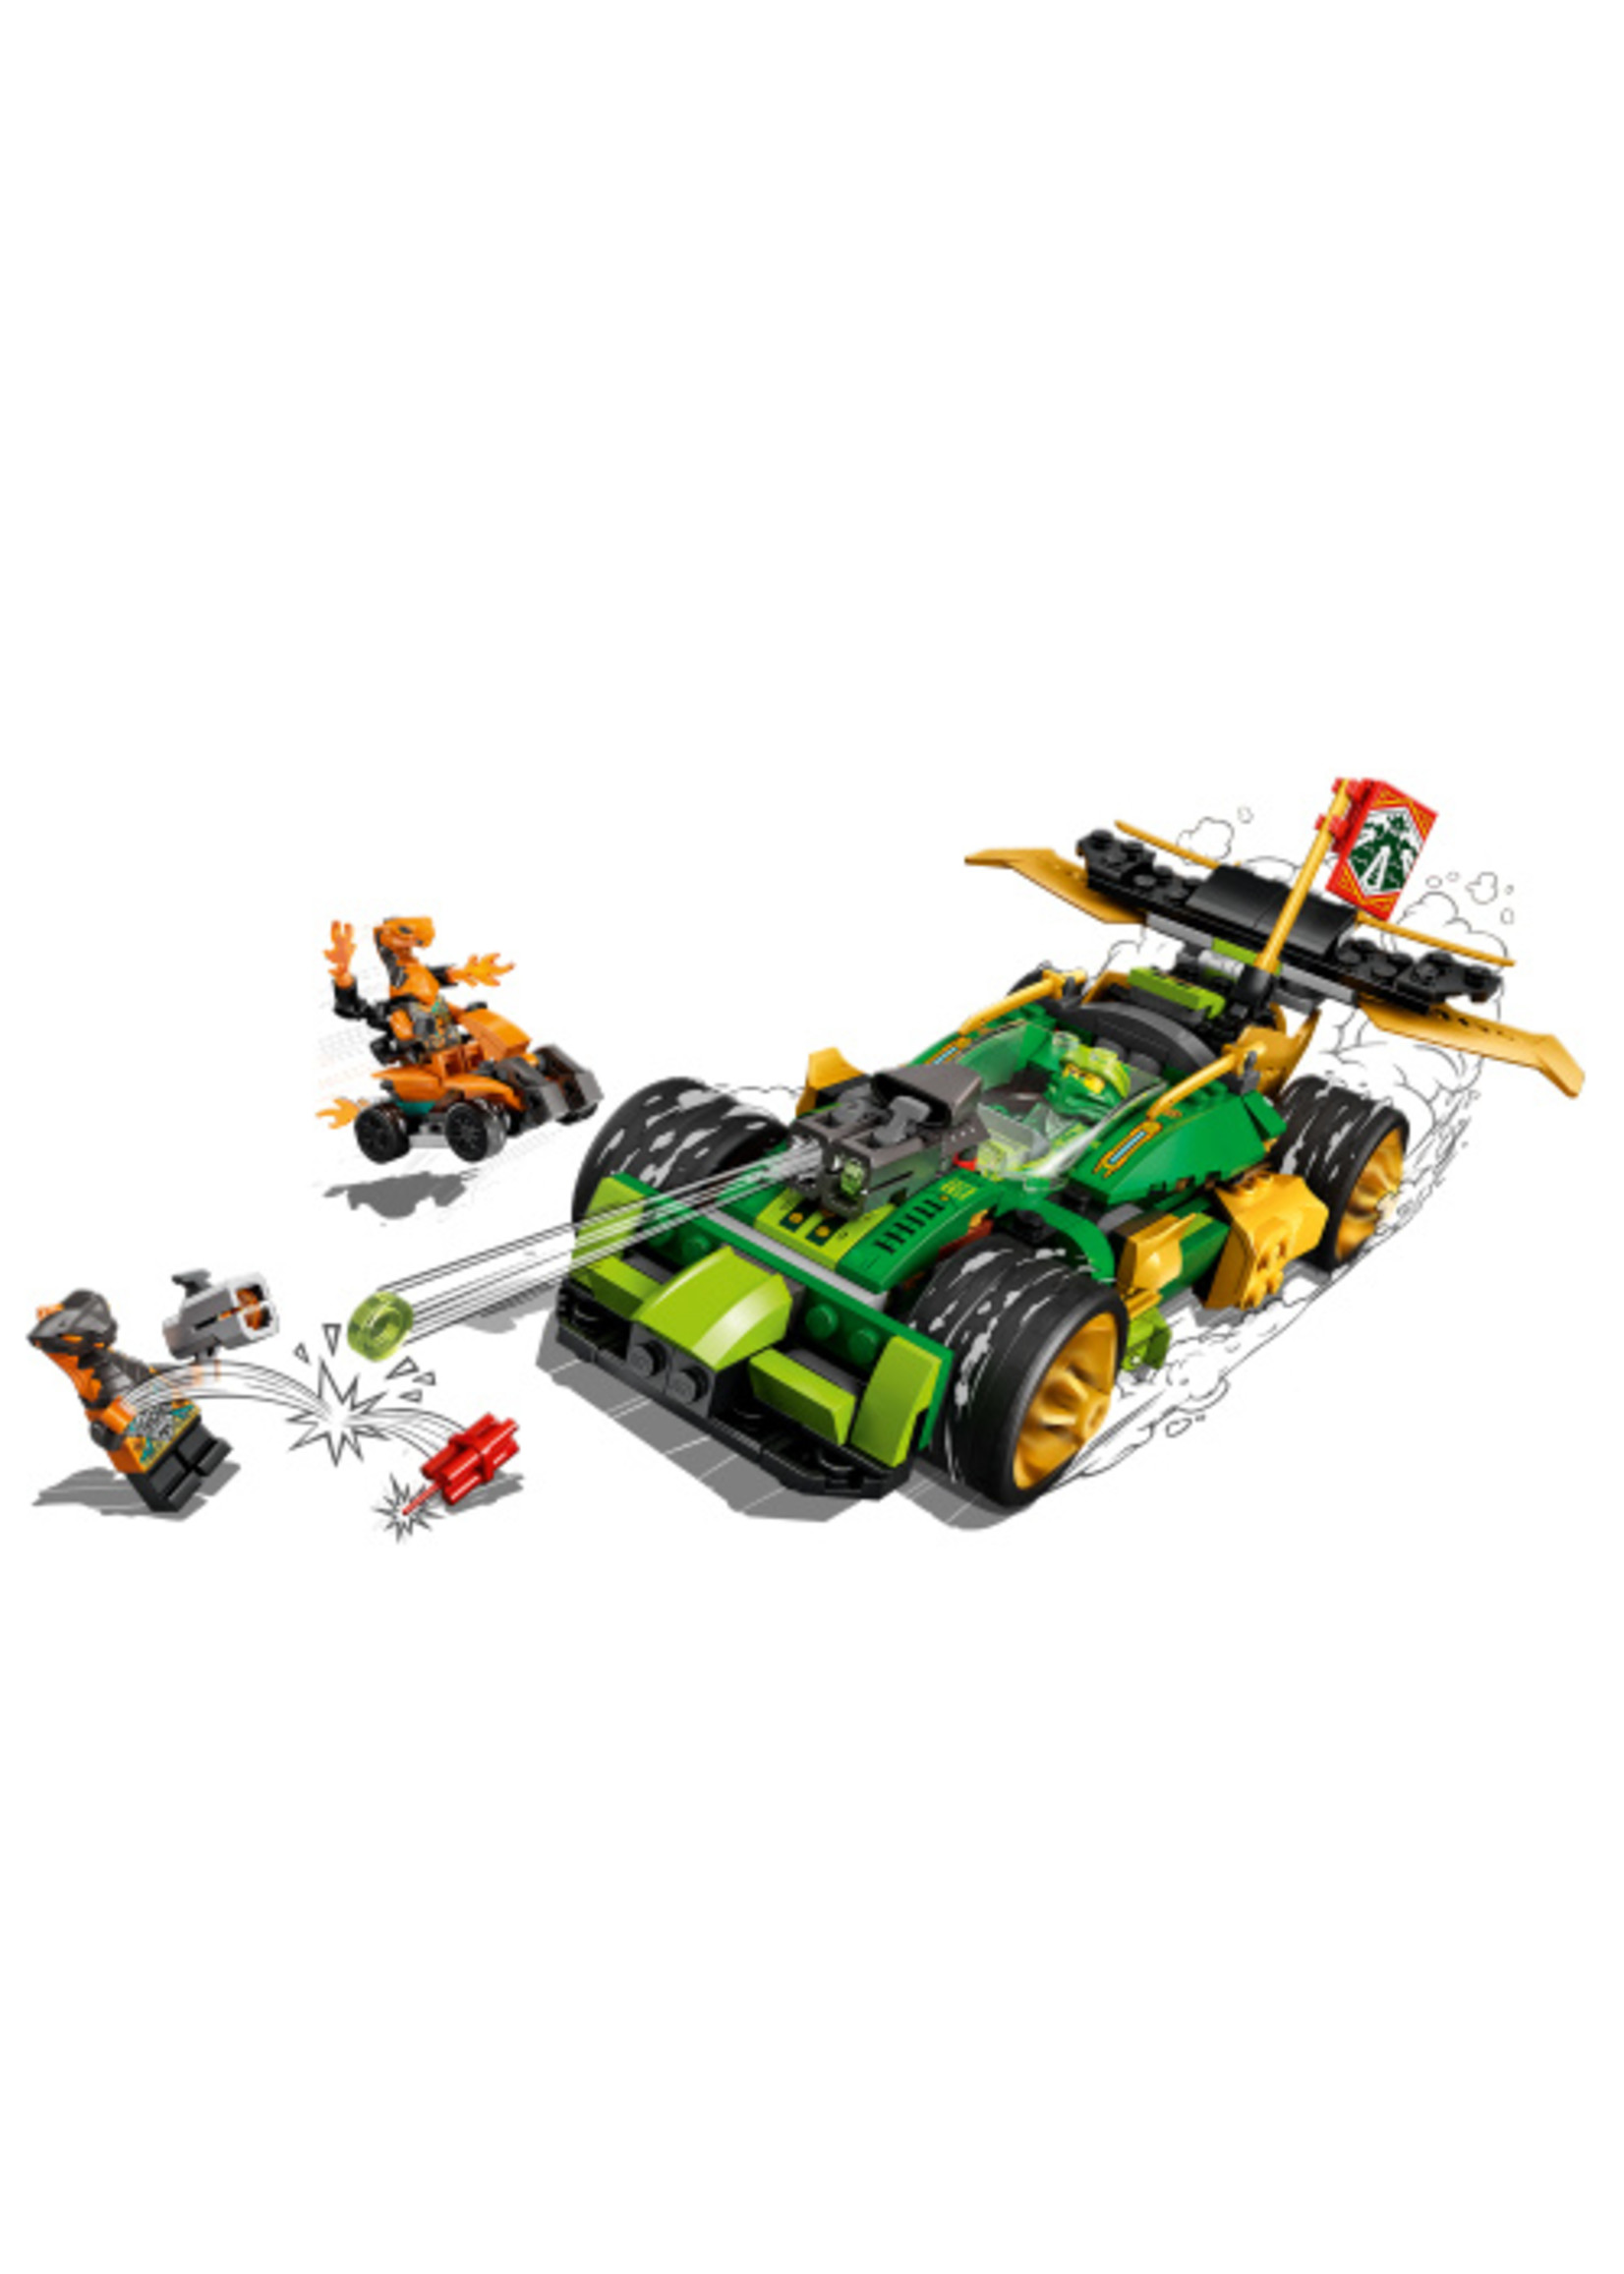 LEGO 71763 - Lloyd's Race Car